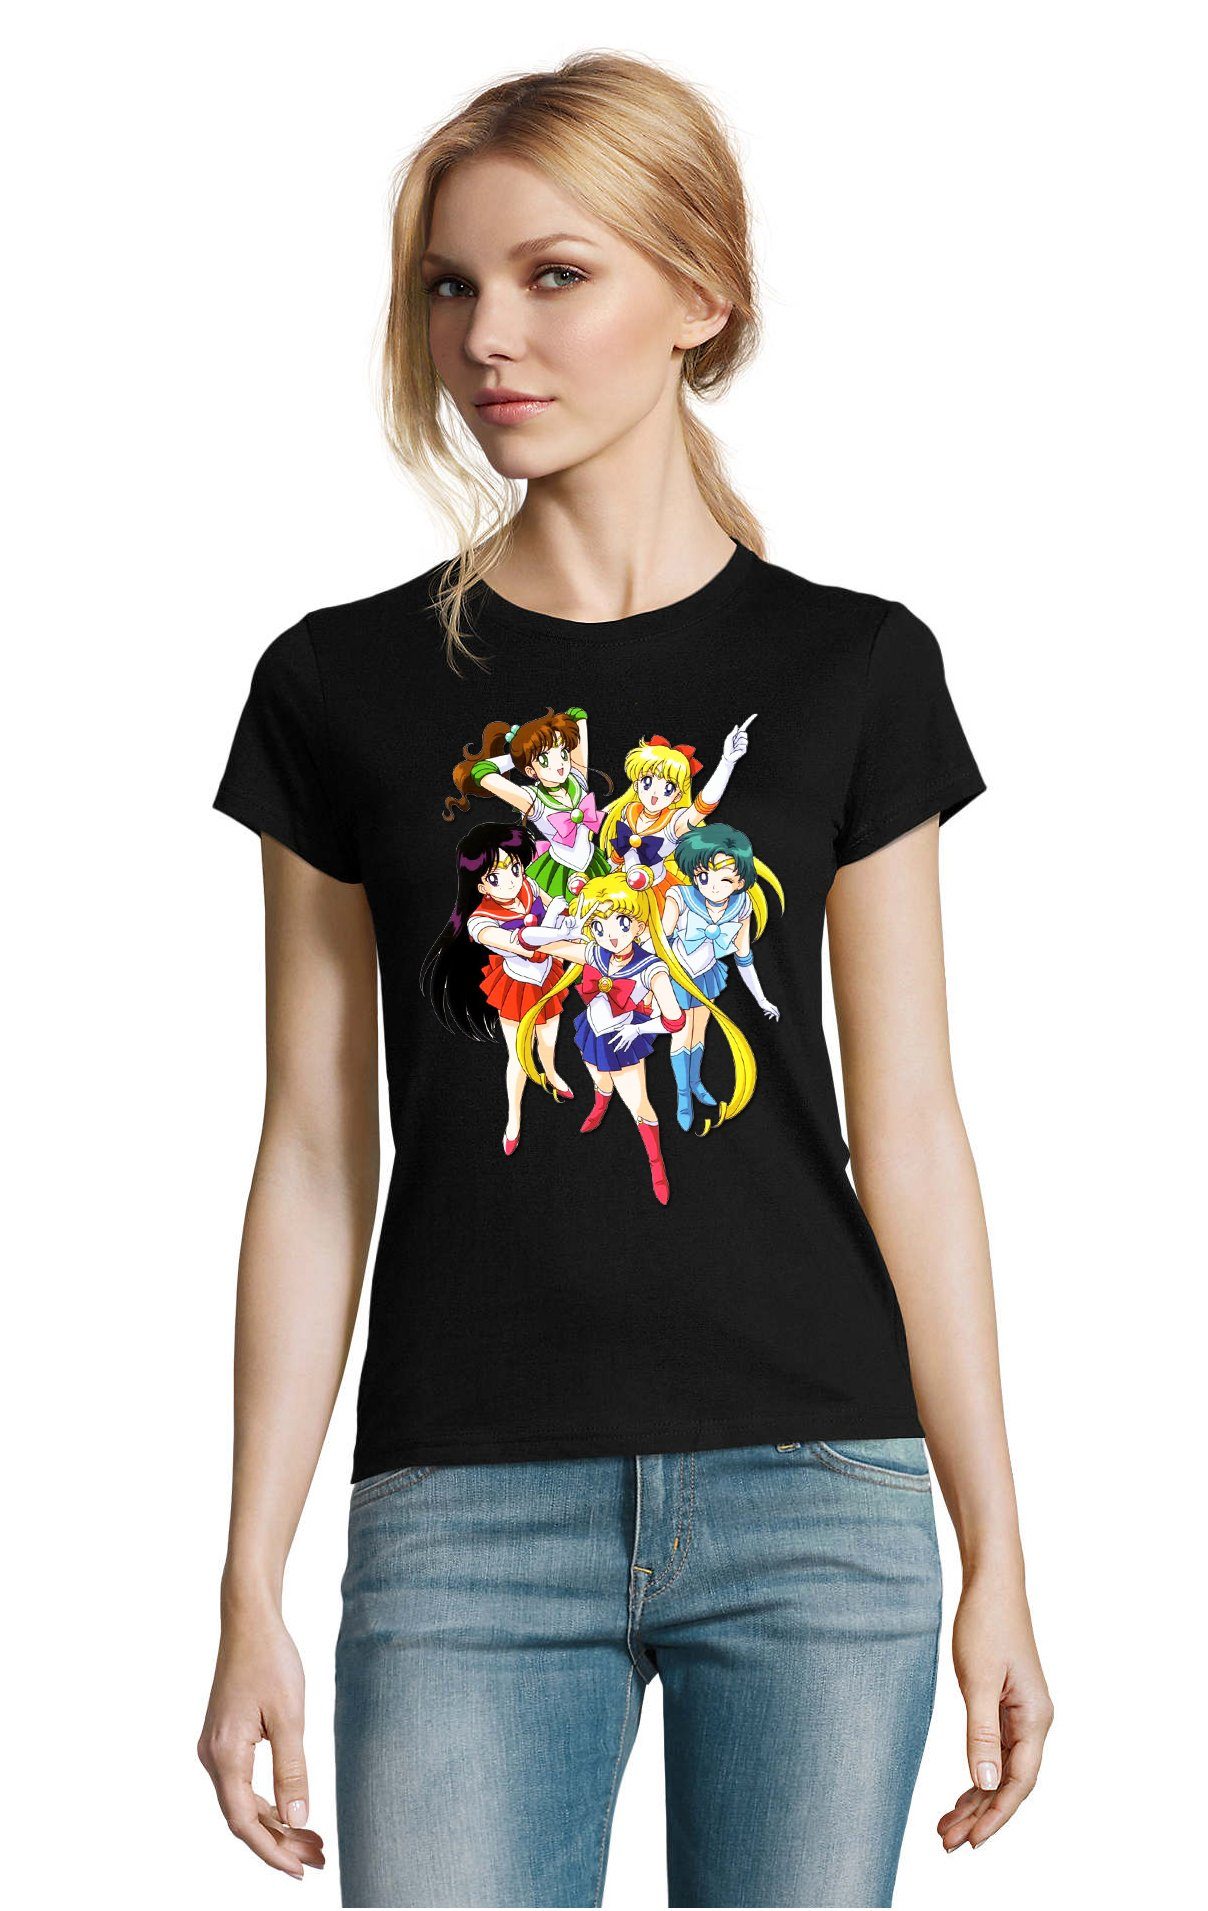 Blondie & Brownie T-Shirt Damen Fun Comic Sailor Moon and Friends Anime Manga Schwarz